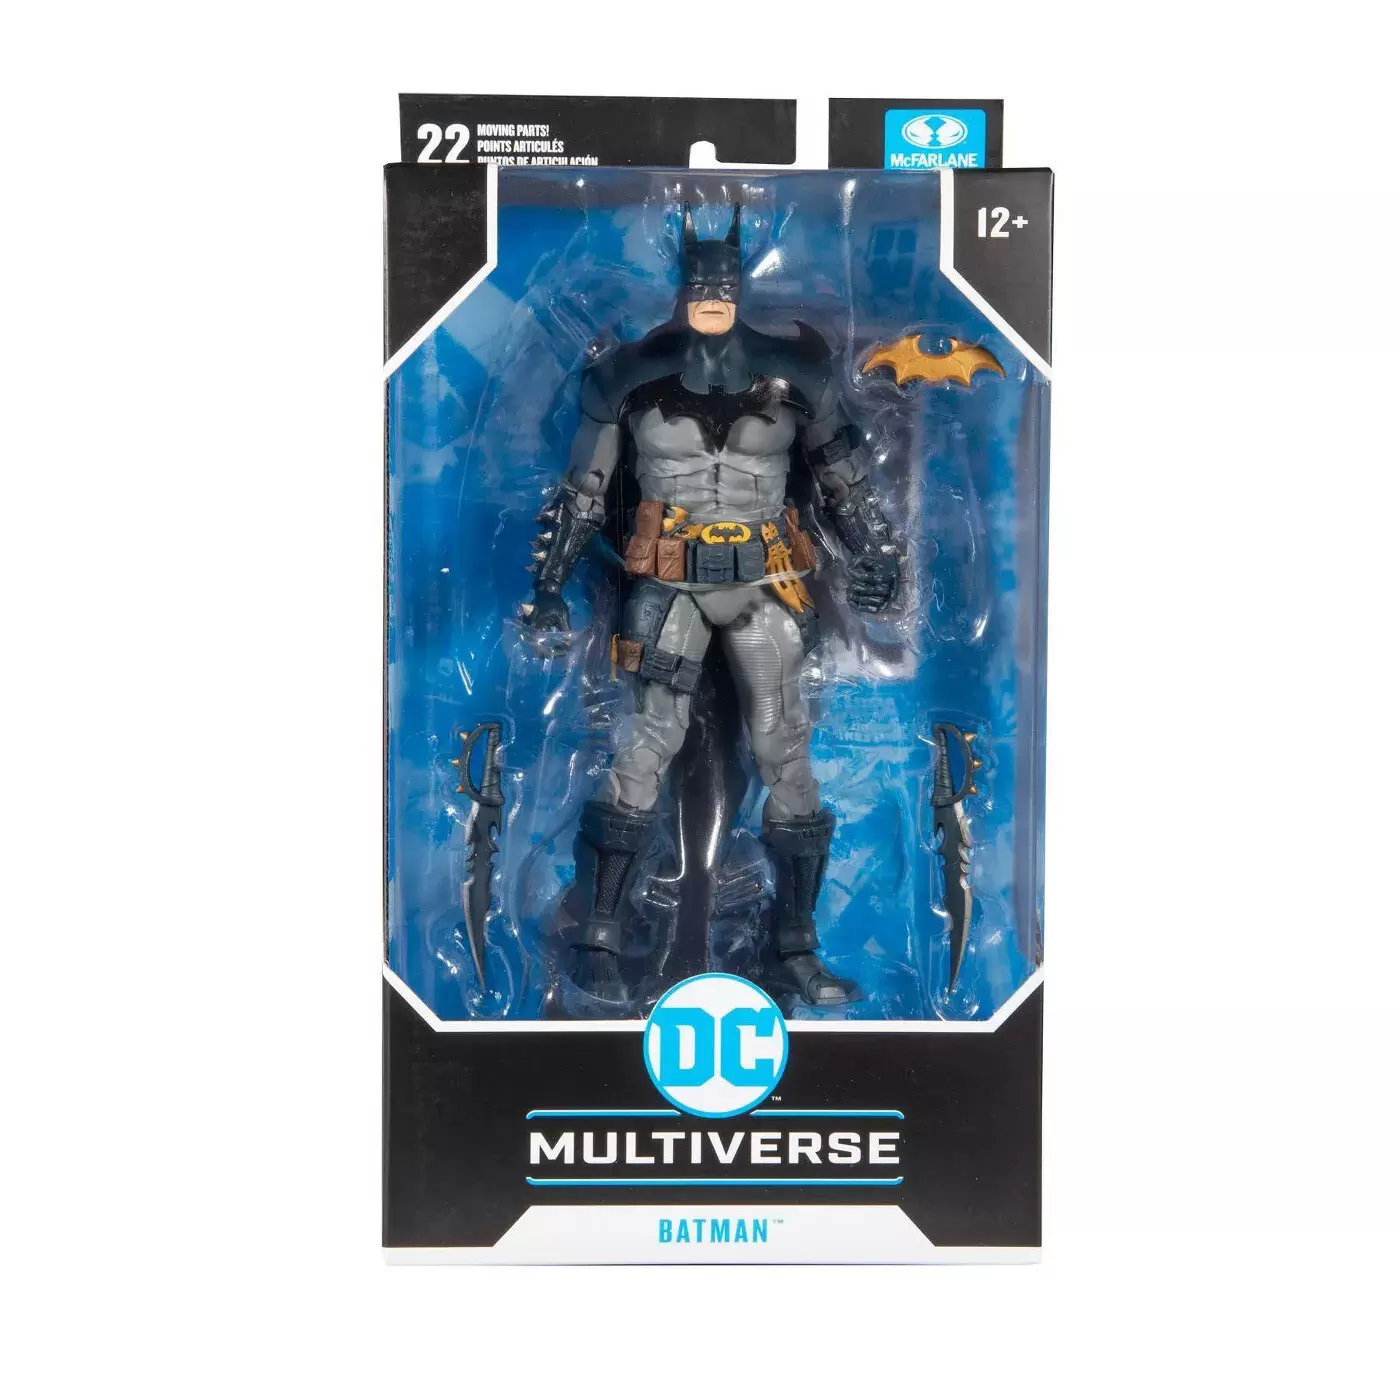 McFarlane - DC Multiverse - Batman - Designed by Todd McFarlane